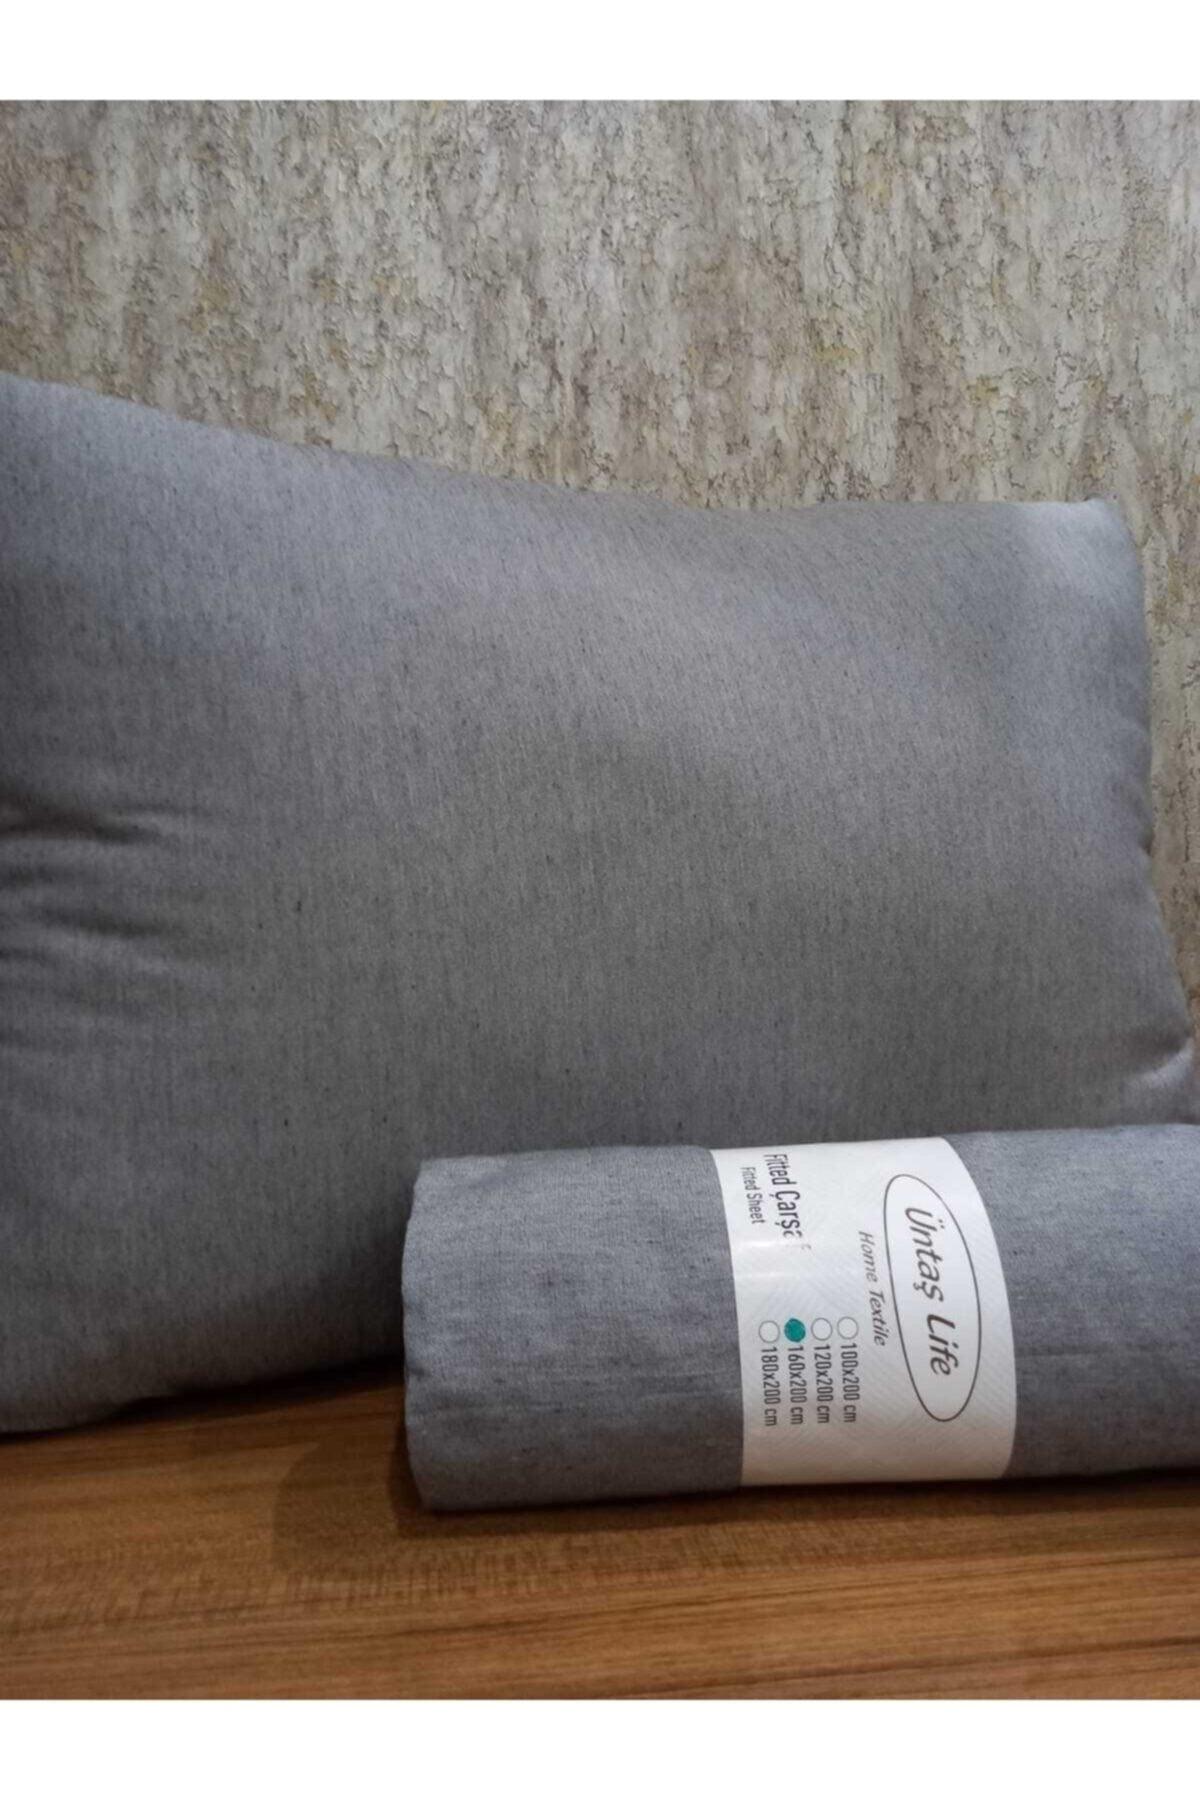 Life 160x200 Double Elastic Bed Sheet+2 Pillowcase Plain Gray Ec160plain Gray Sheet - Swordslife